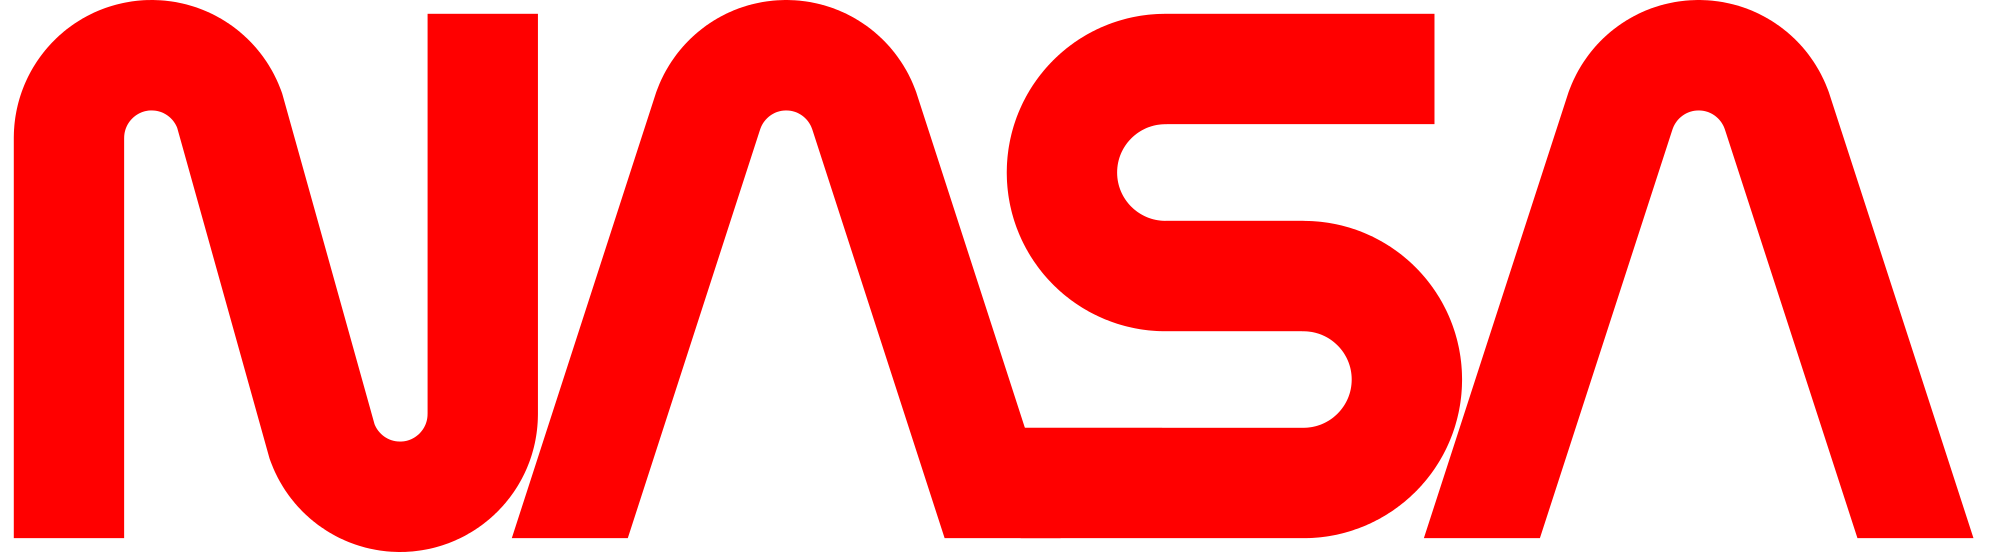 NASA Snake Logo - Worms, meatballs and logos | MetaFilter